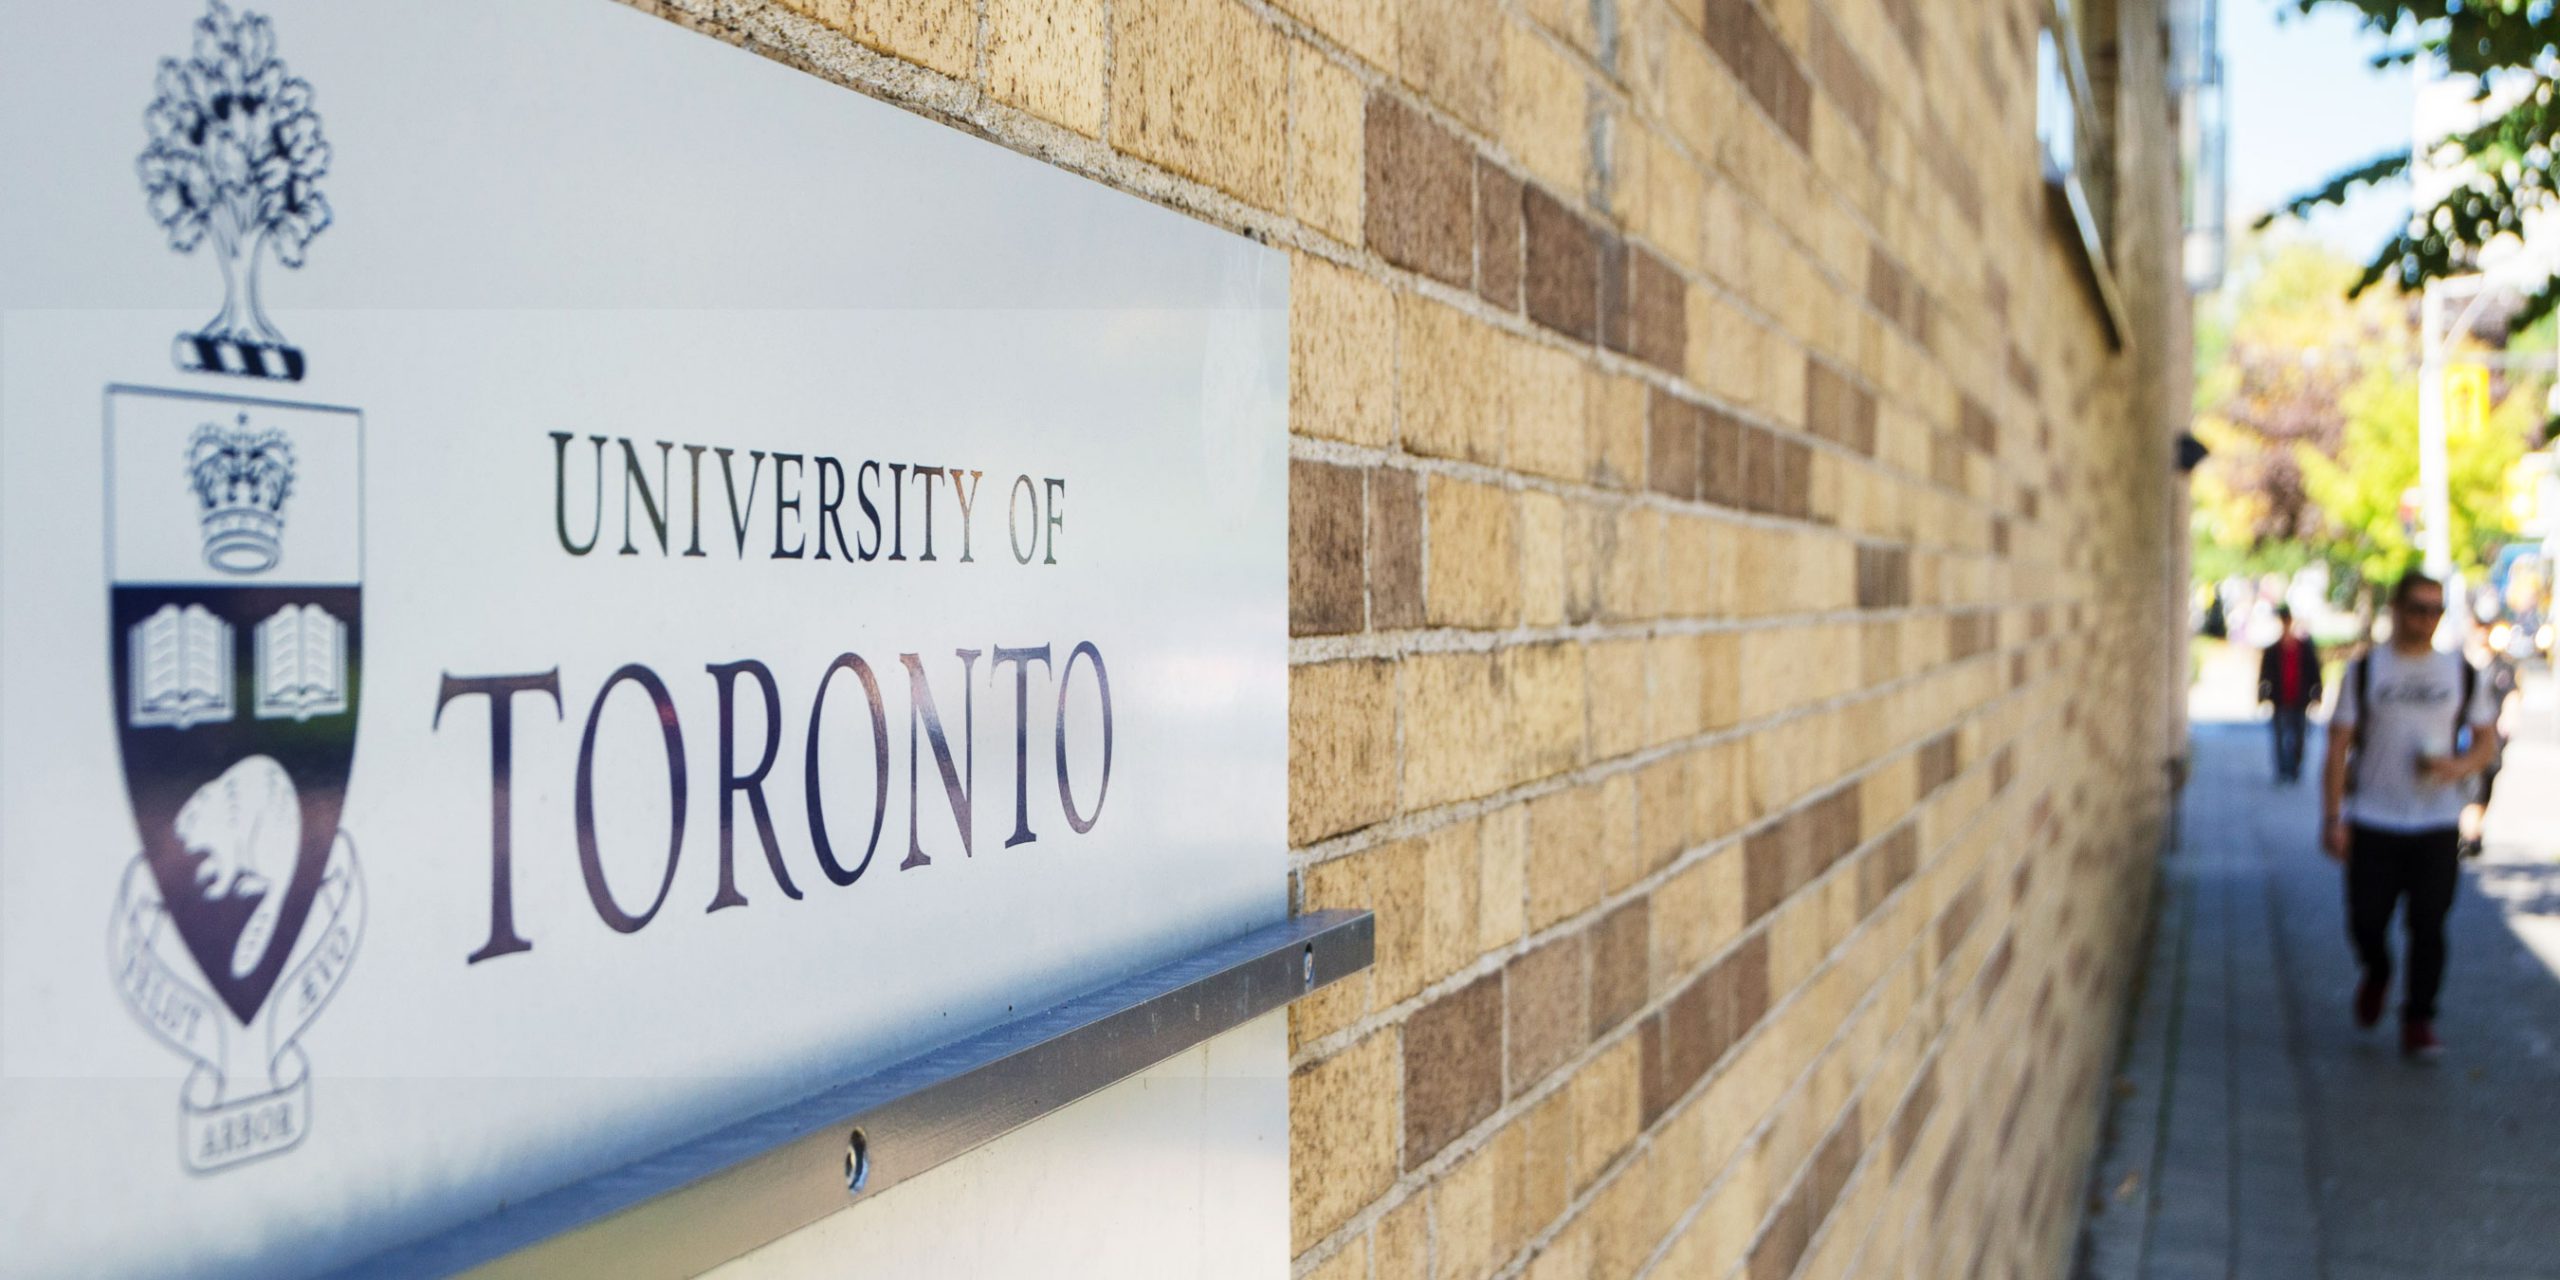 Universty of Toronto sign on brick wall